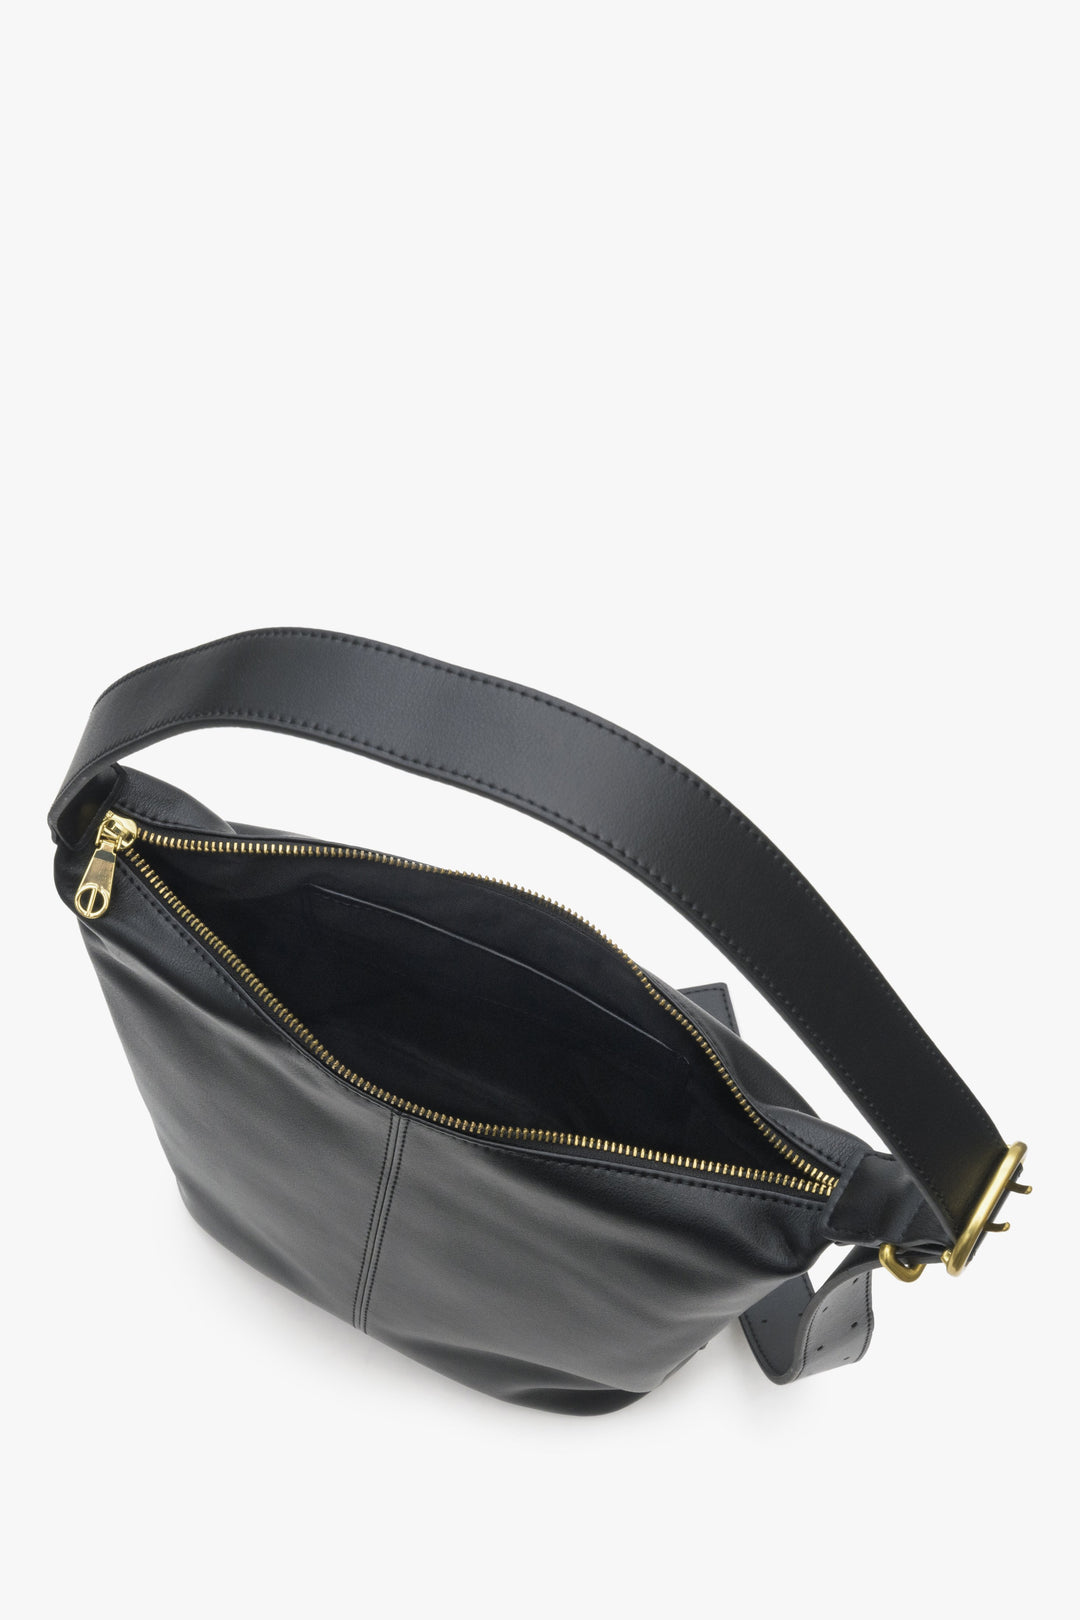 Women's black leather Estro handbag - close-up on the interior of the model.